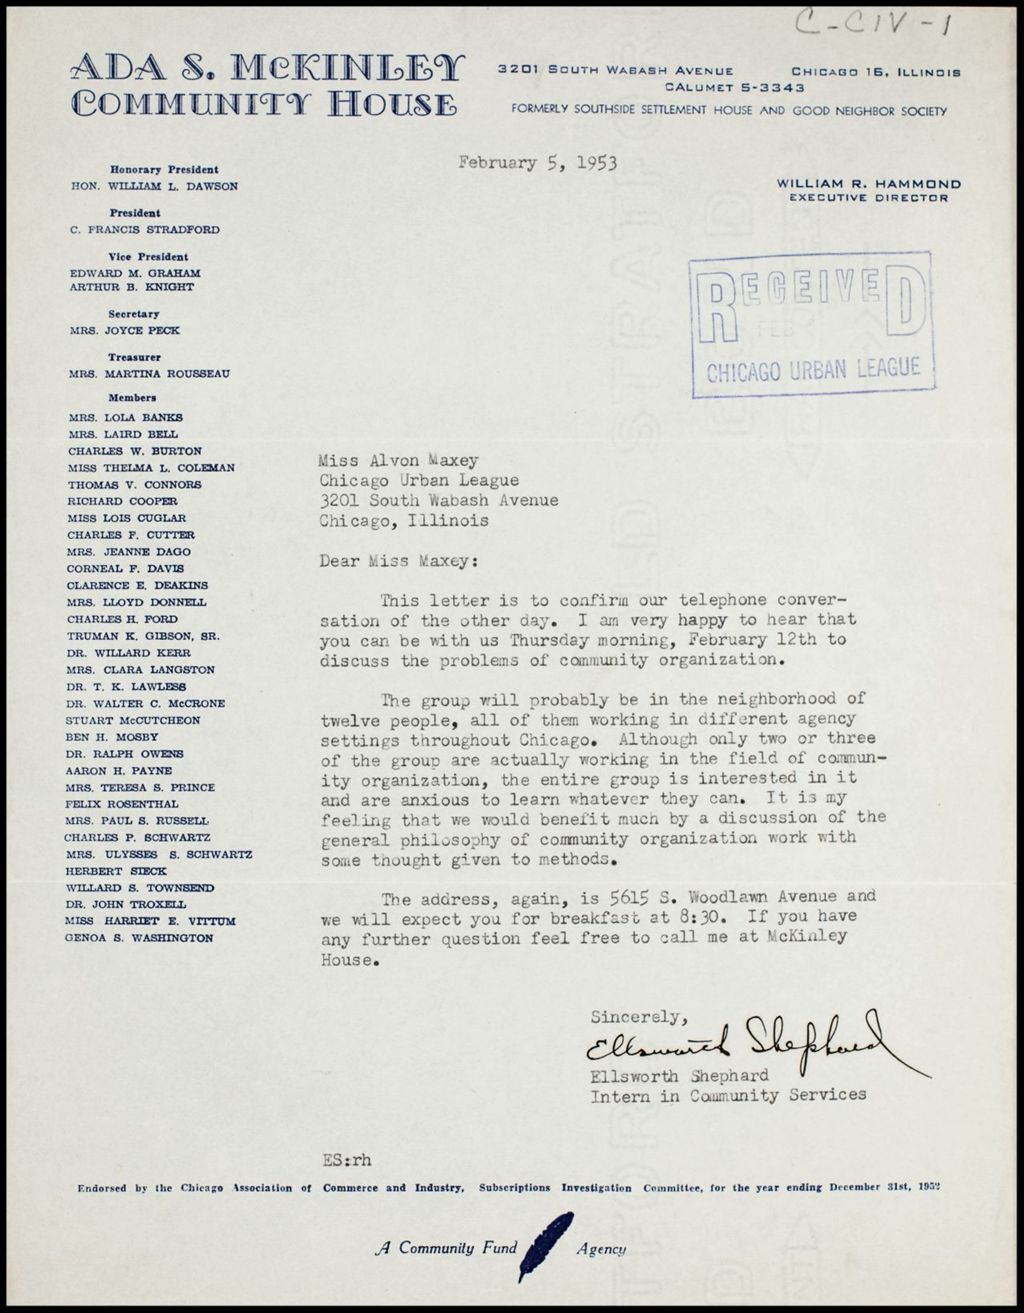 Miniature of Douglas Area Council - correspondence, 1953-1955 (Folder I-2668)